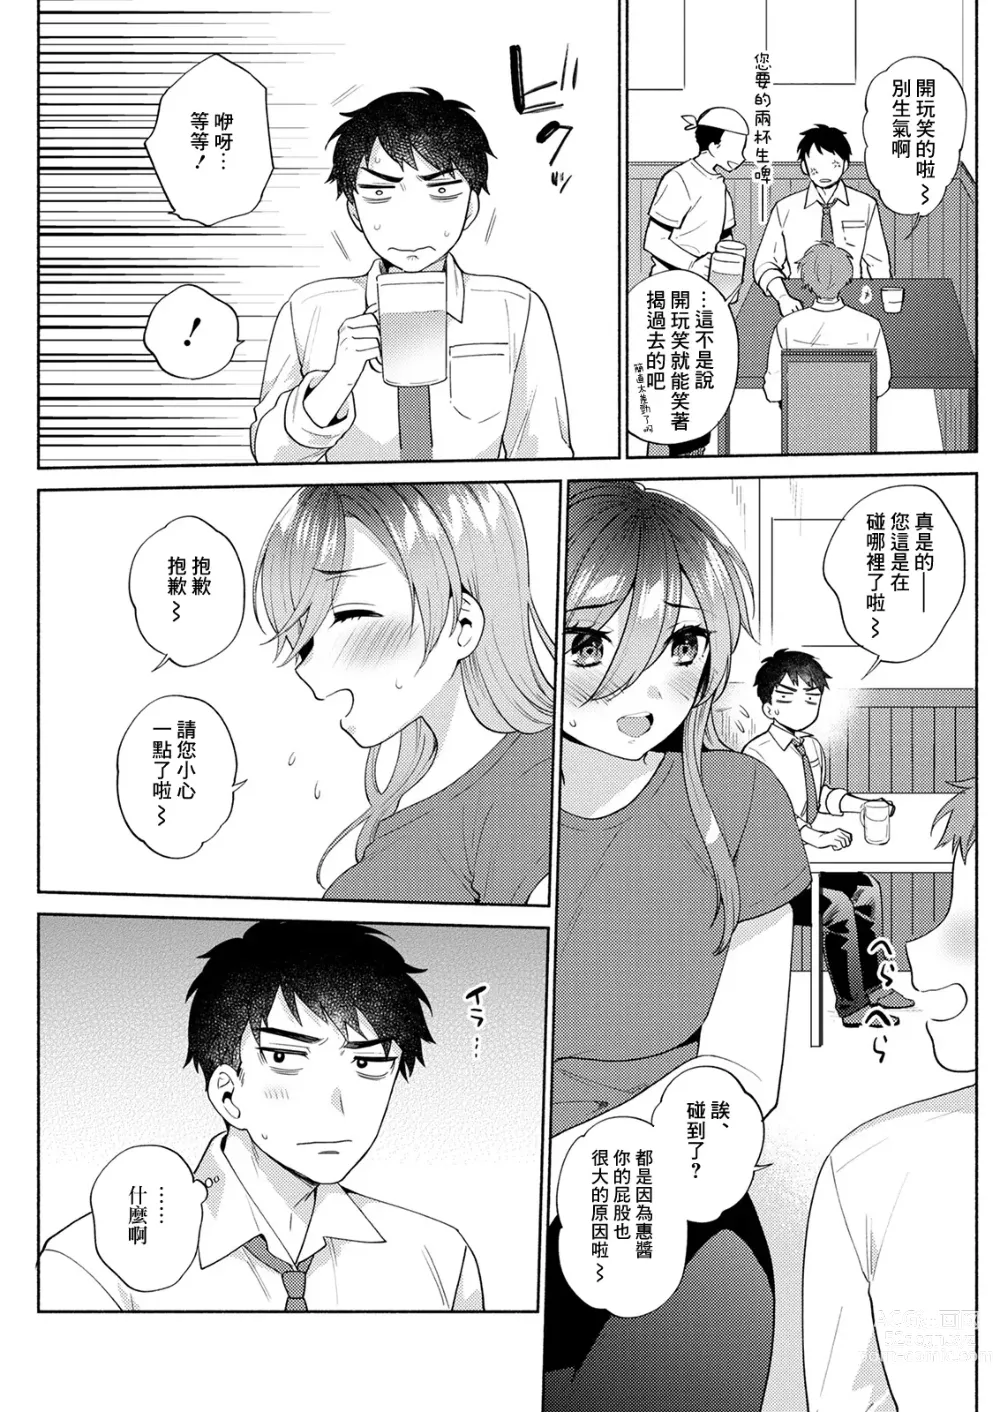 Page 3 of manga Overskip